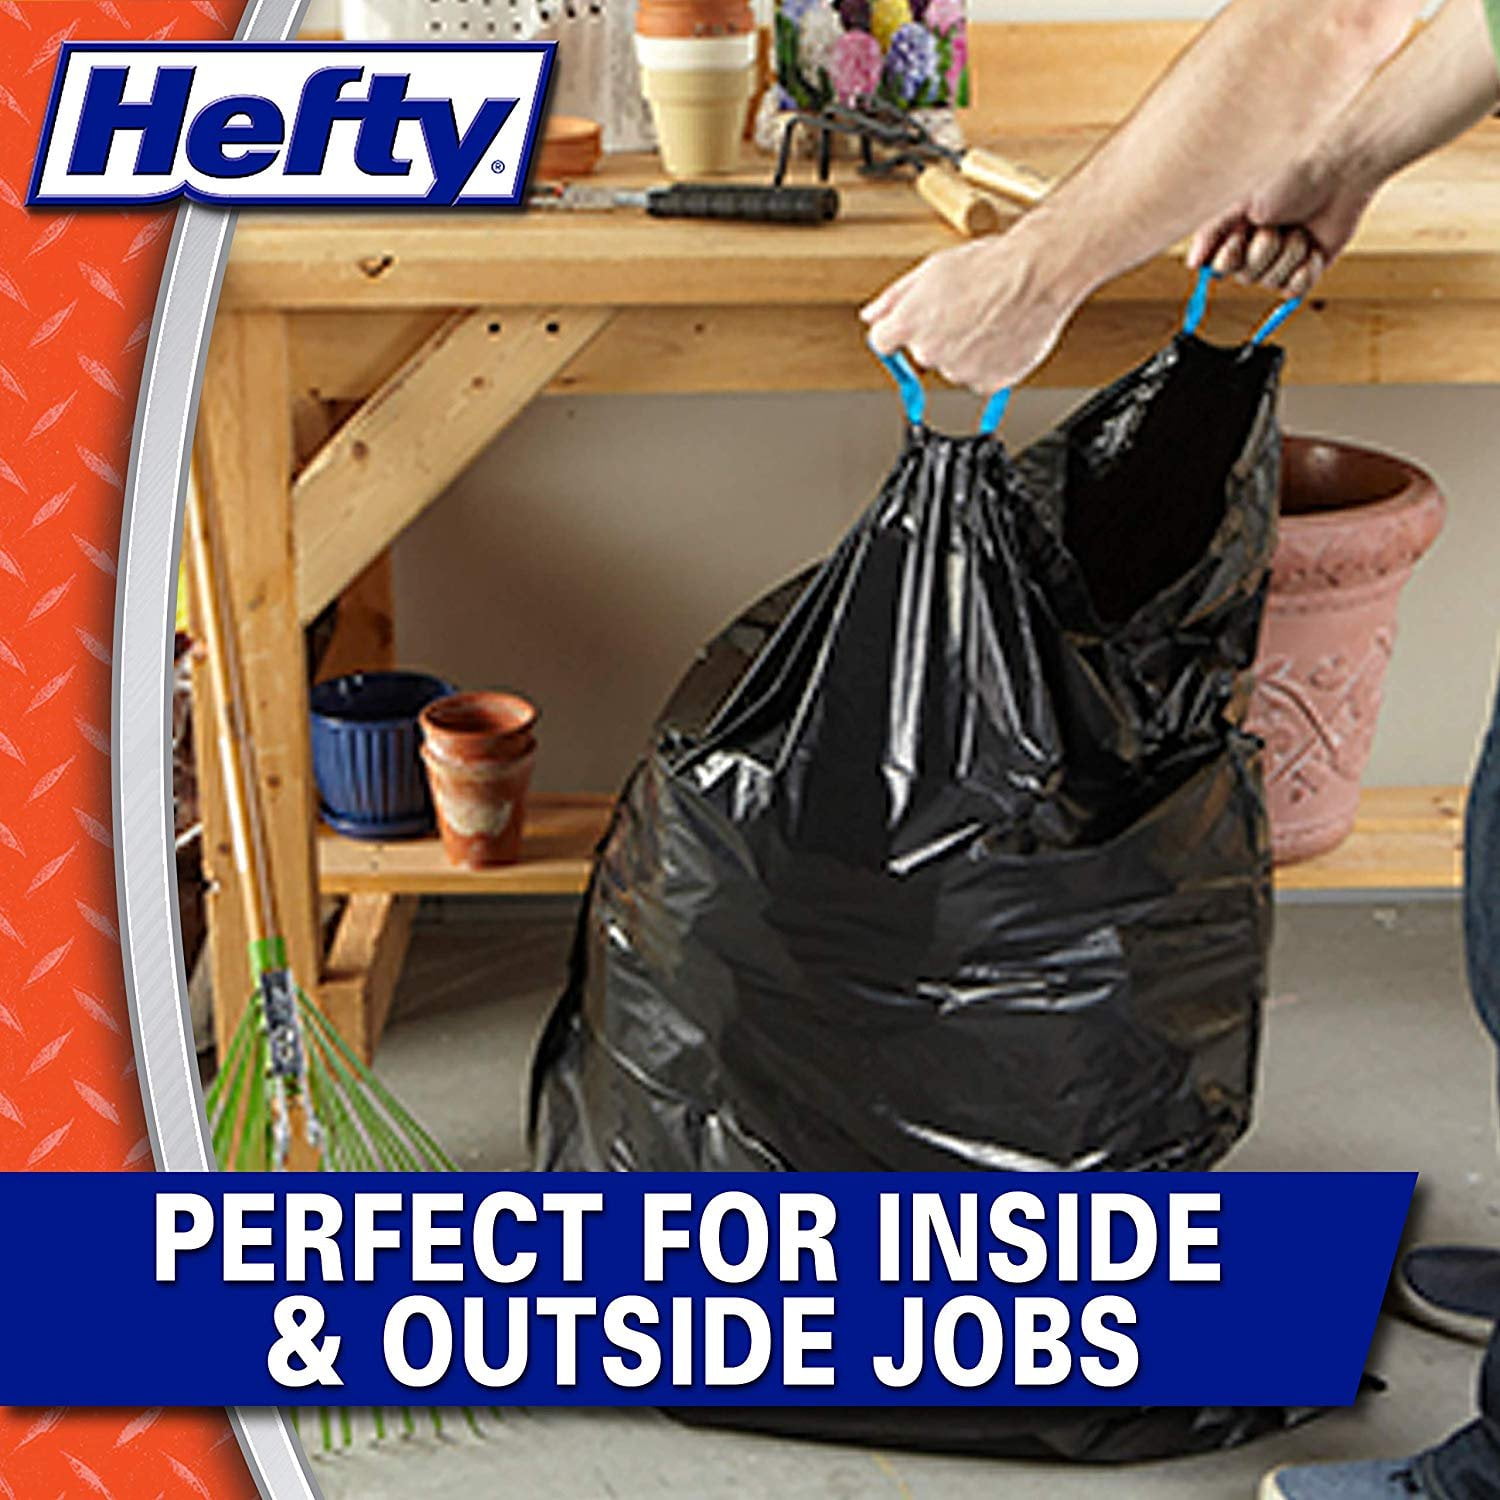 Hefty® Strong Multipurpose 30-Gallon Large Drawstring Trash Bags Mega Pack,  56 ct - Kroger